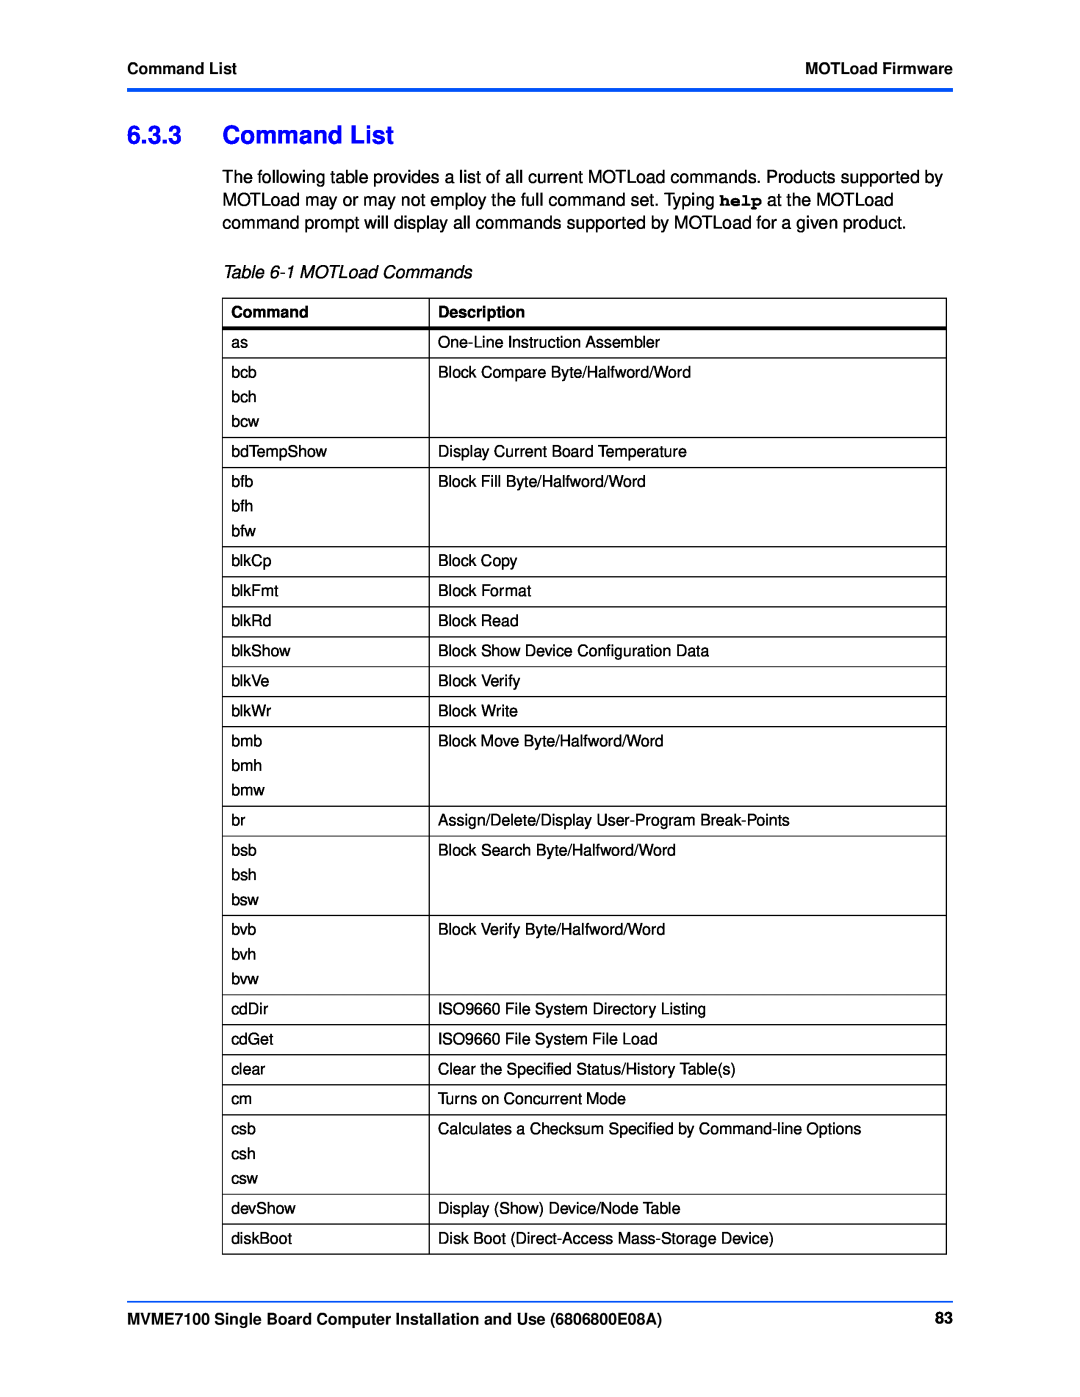 Emerson MVME7100 manual Command List, 1 MOTLoad Commands, MOTLoad Firmware, Description 